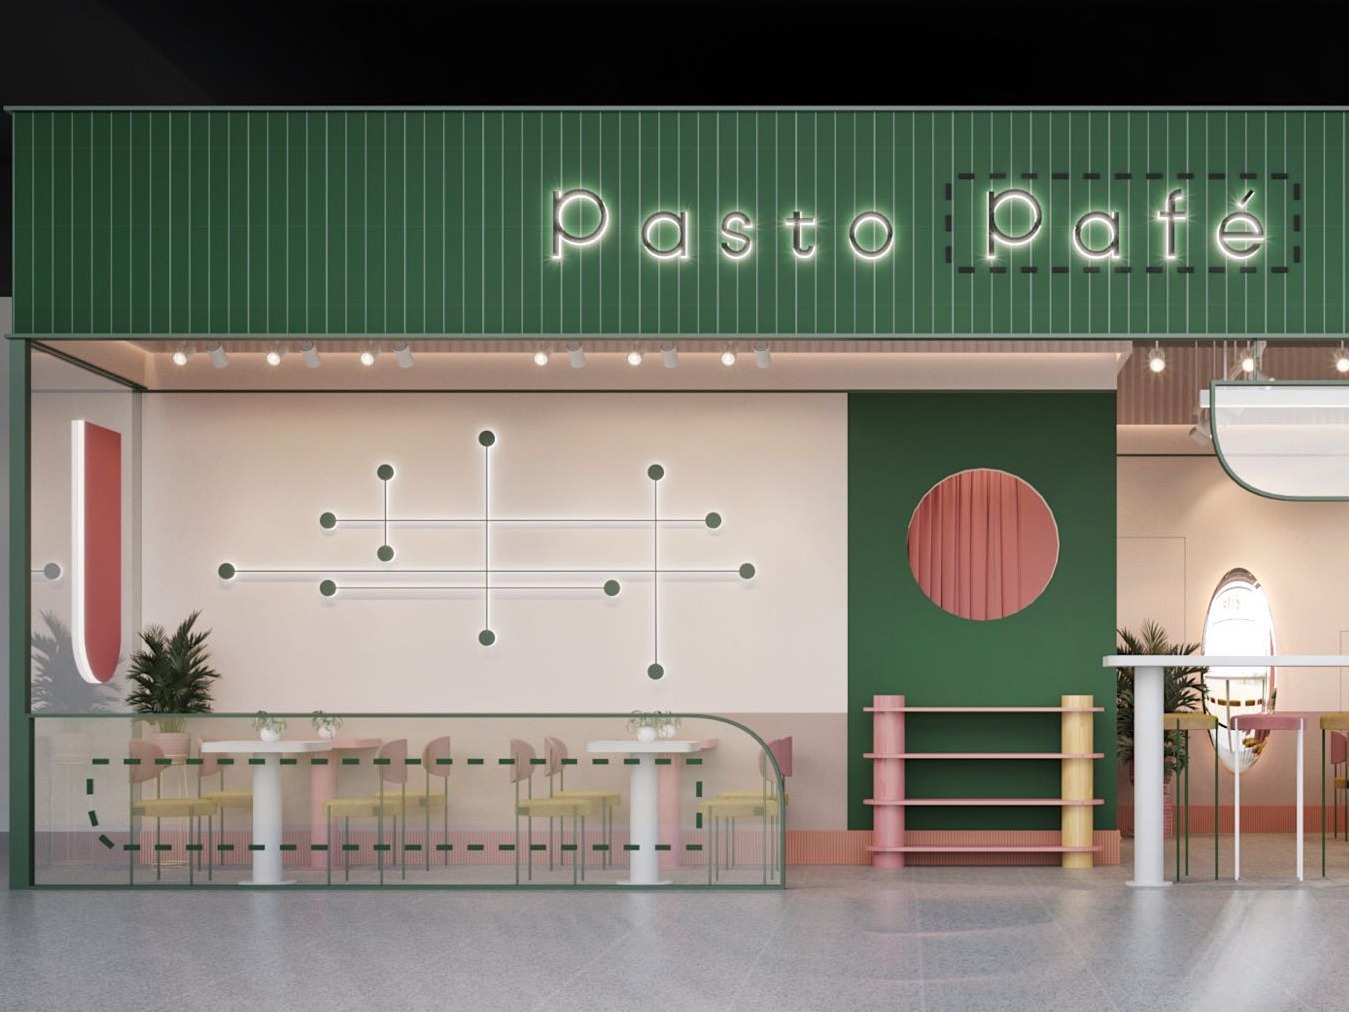 Pasto Pafe 意面轻食餐厅空间与视觉设计